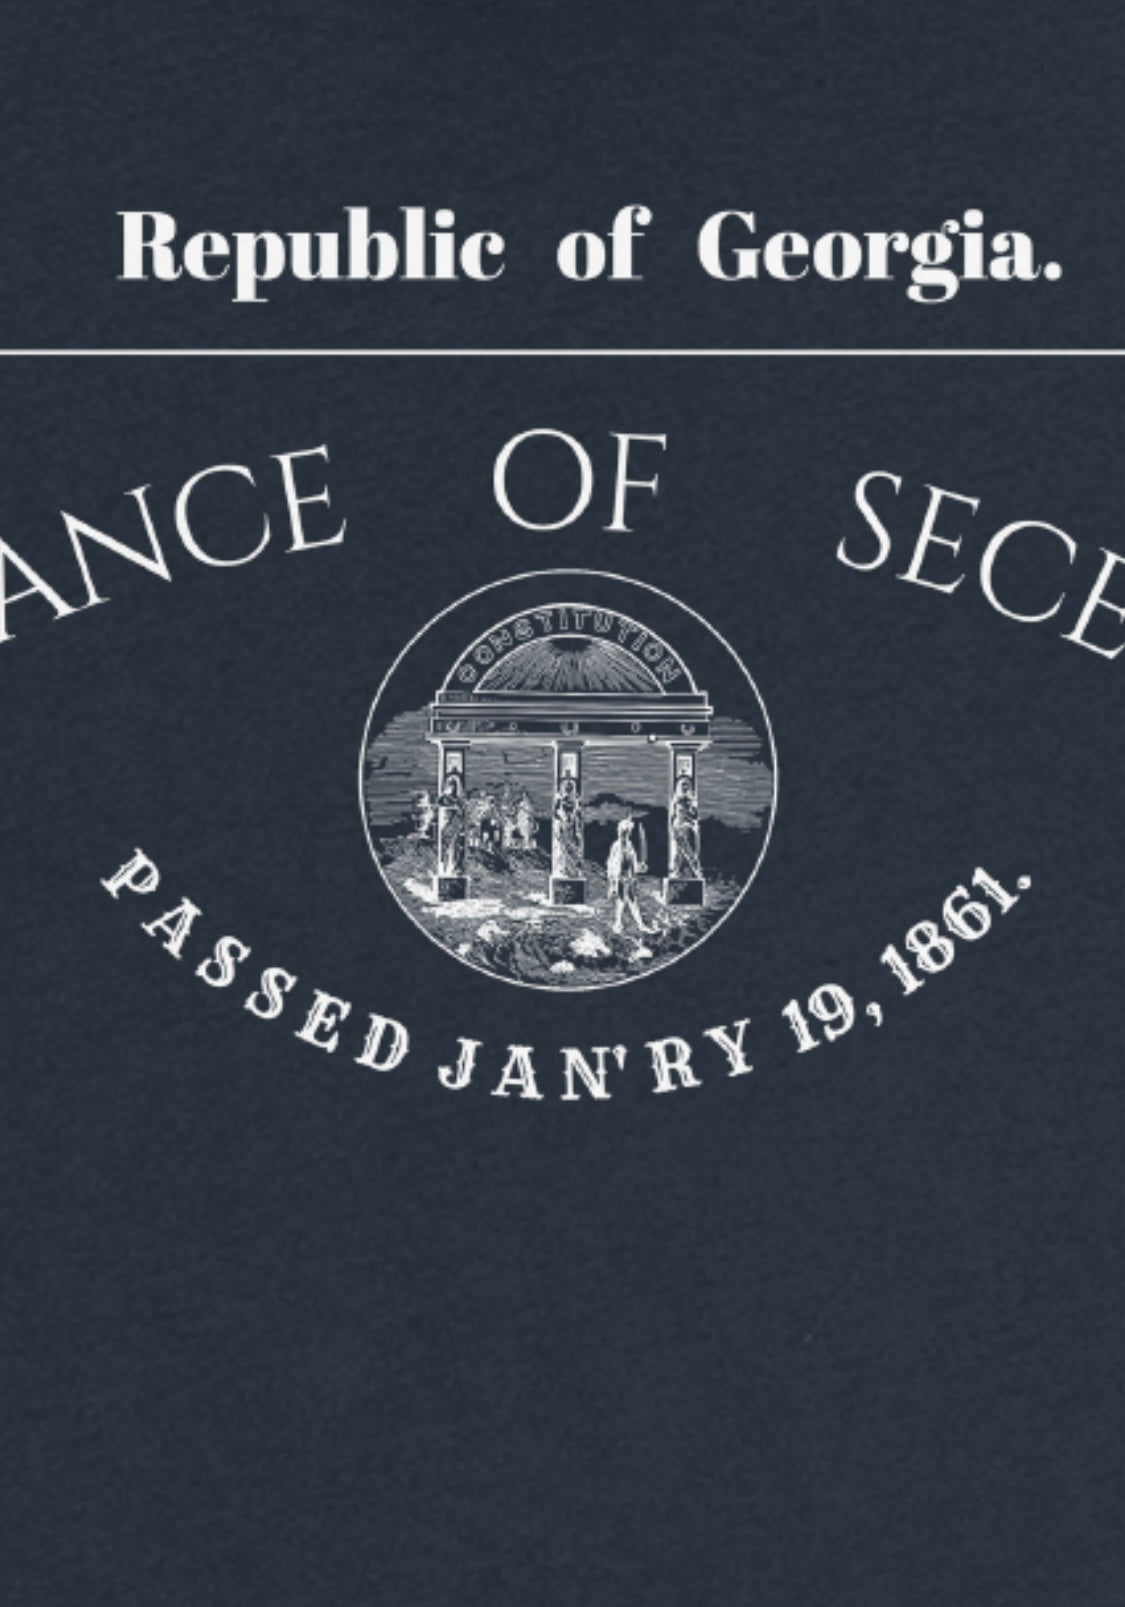 Republic of Georgia - Secession Ordinance Shirt